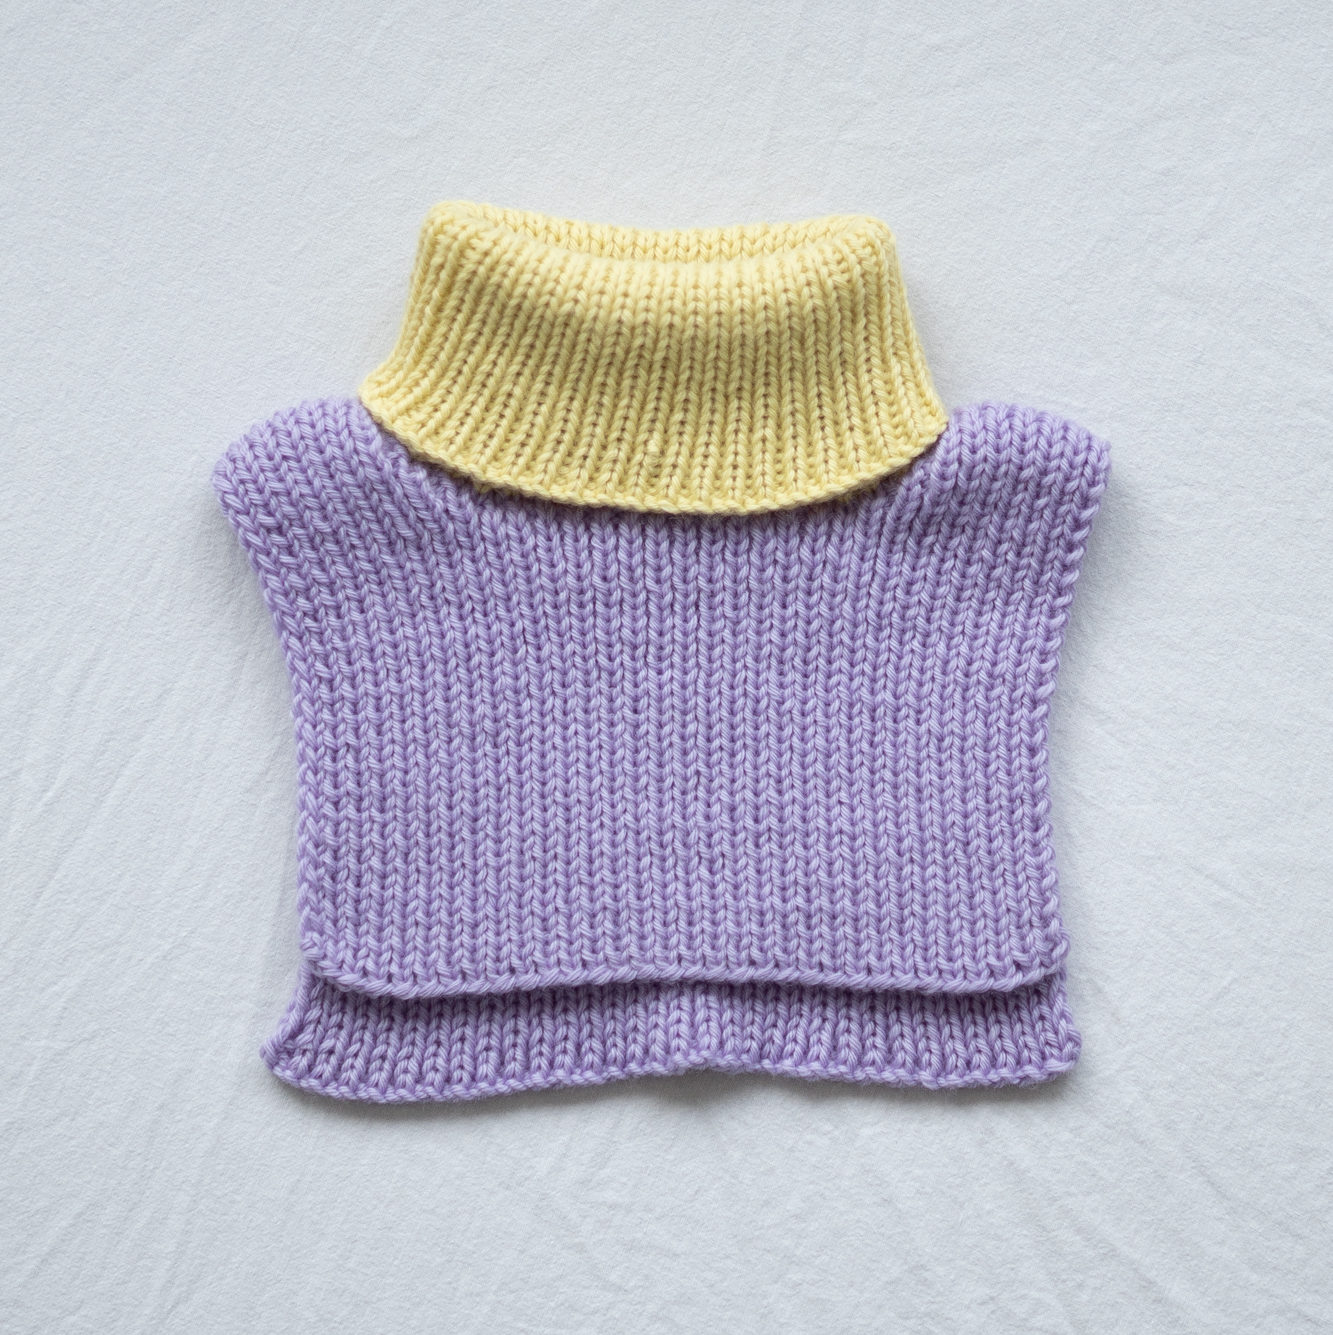  - POP neck kids | Knitted neck warmer | Knitting pattern - by HipKnitShop - 09/10/2020